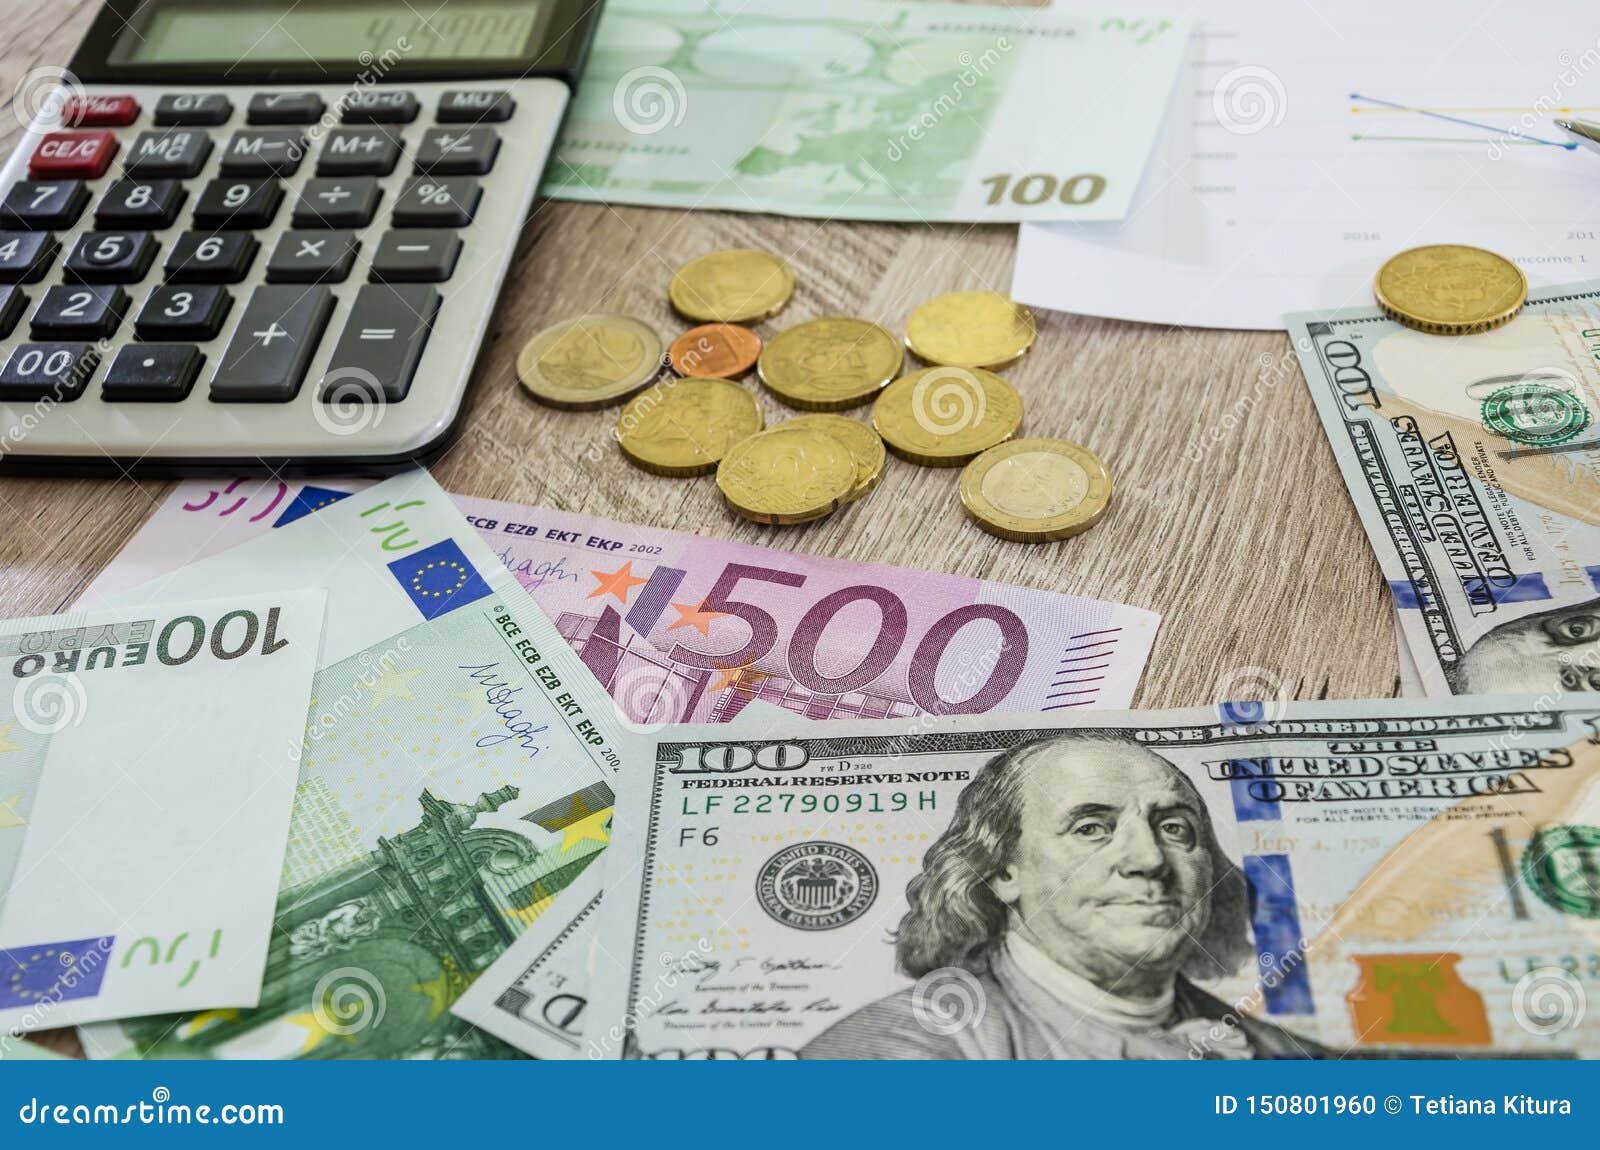 Калькулятор евро в доллары на сегодня. Евро в доллары калькулятор. Валютный калькулятор евро.